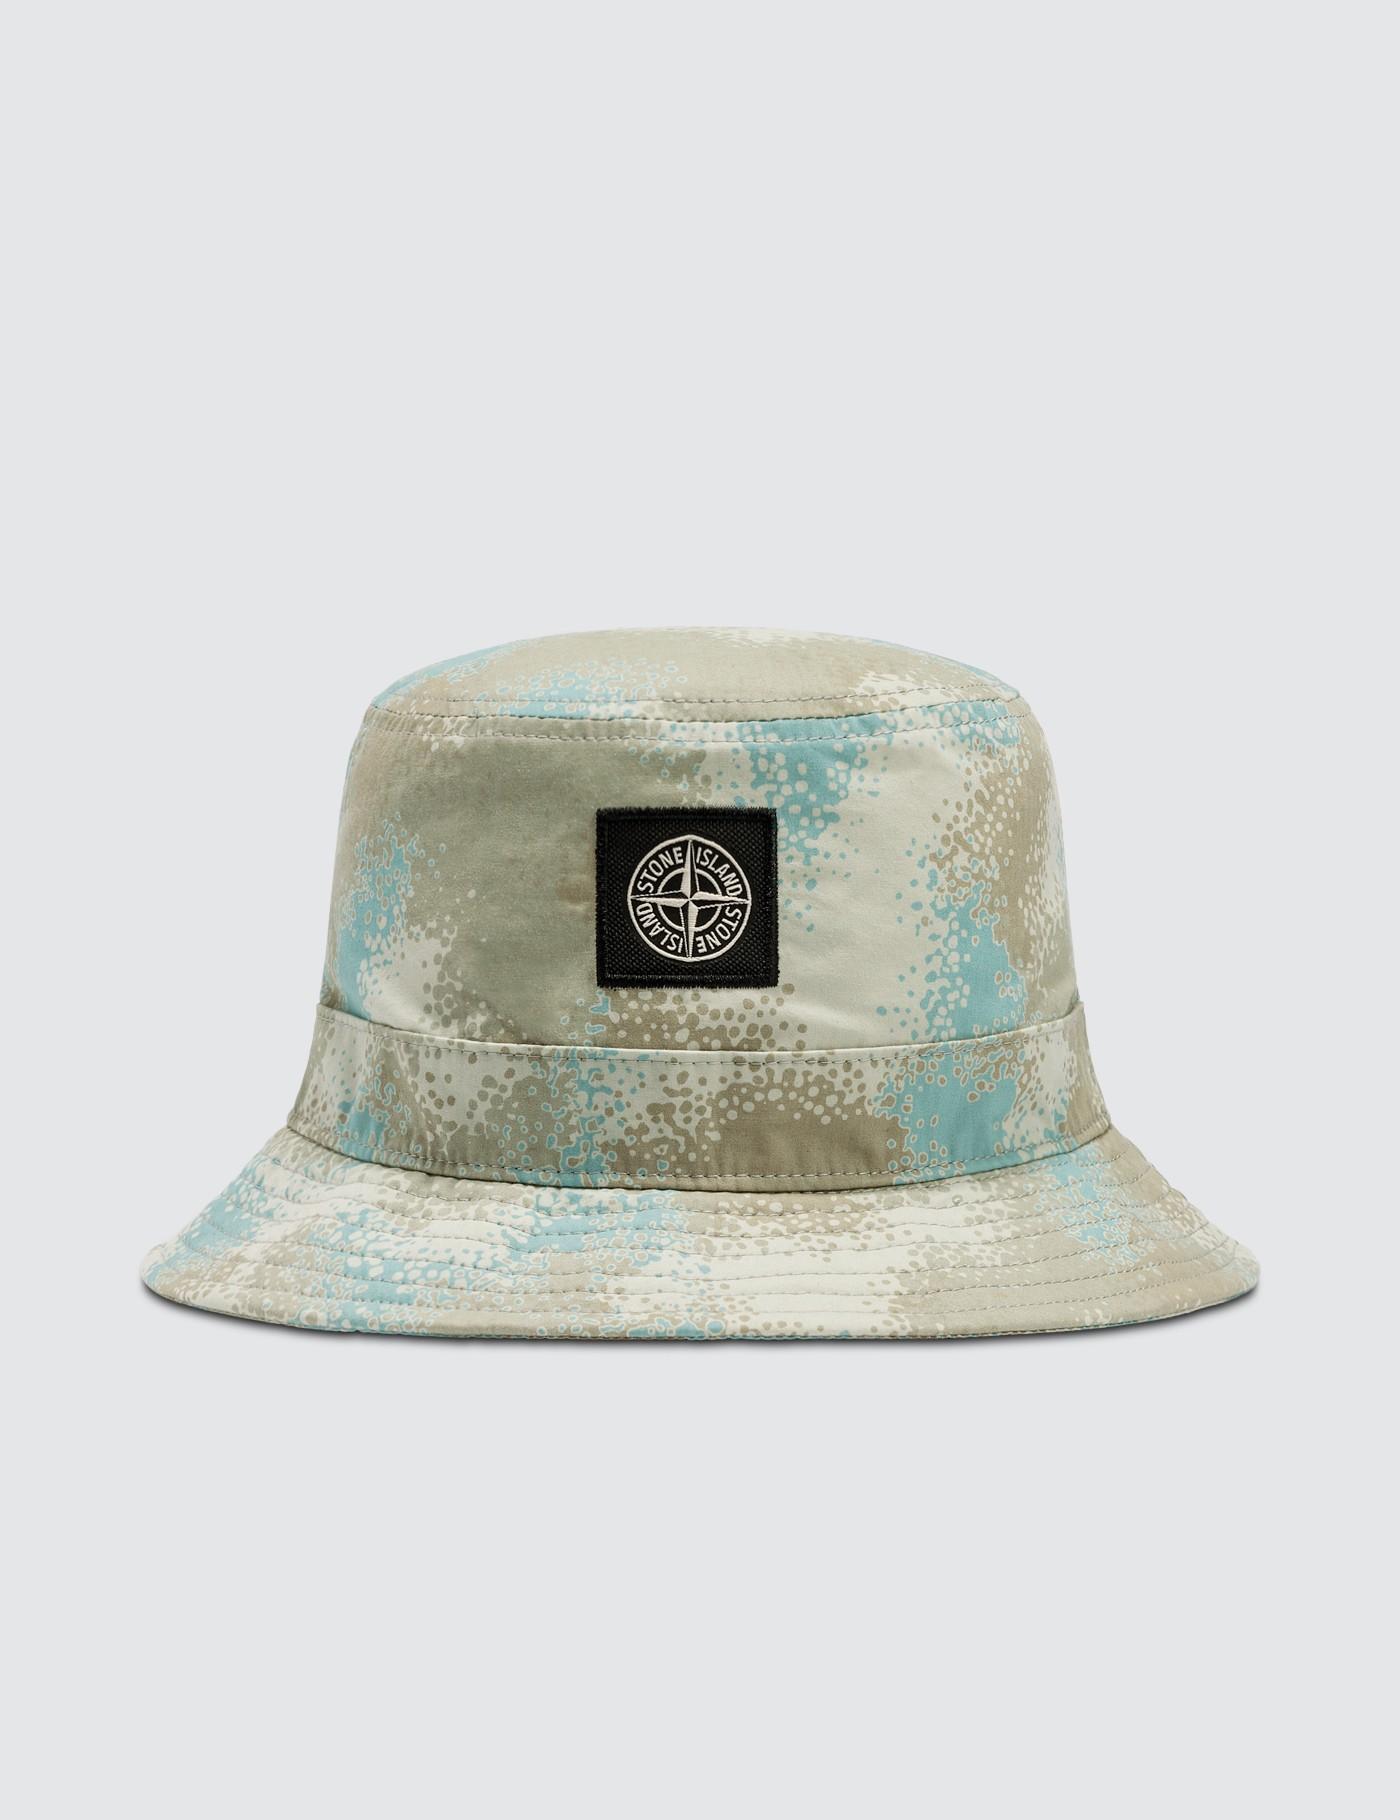 Stone Island Camo Devore Bucket Hat in Grey (Grey) for Men - Lyst